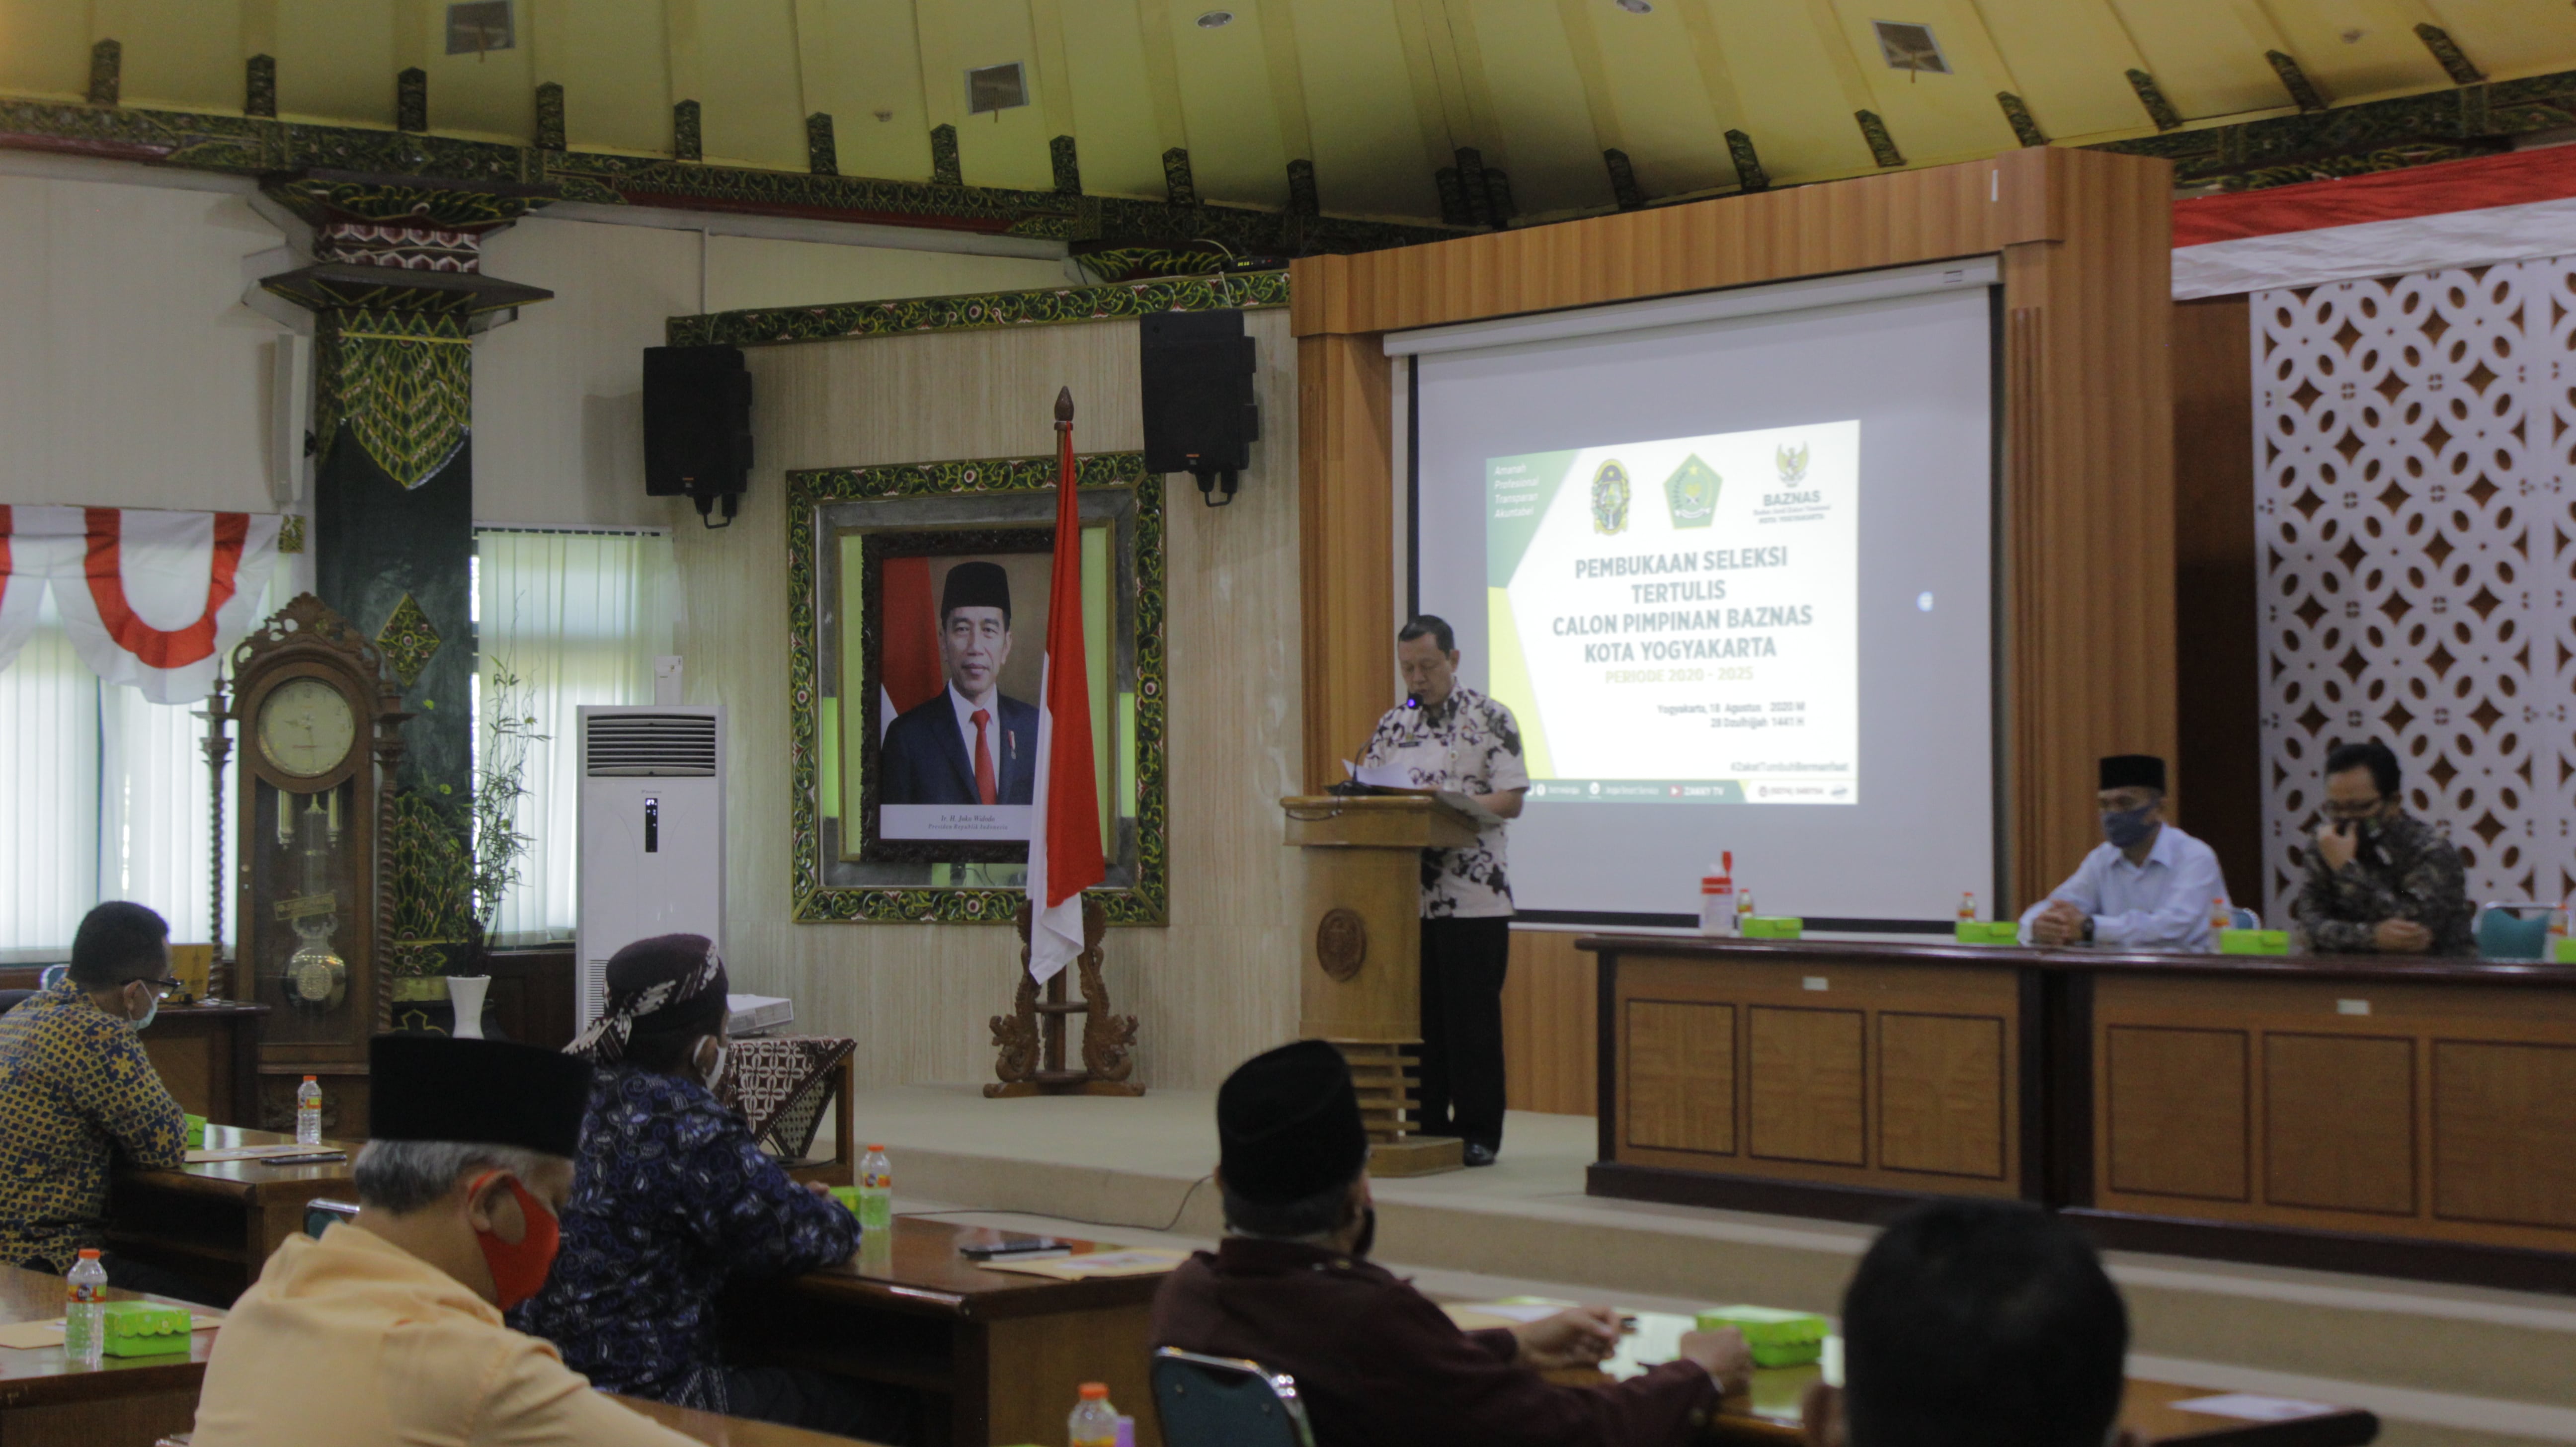 17 Calon Pimpinan BAZNAS Kota Yogyakarta Jalani Seleksi Tertulis